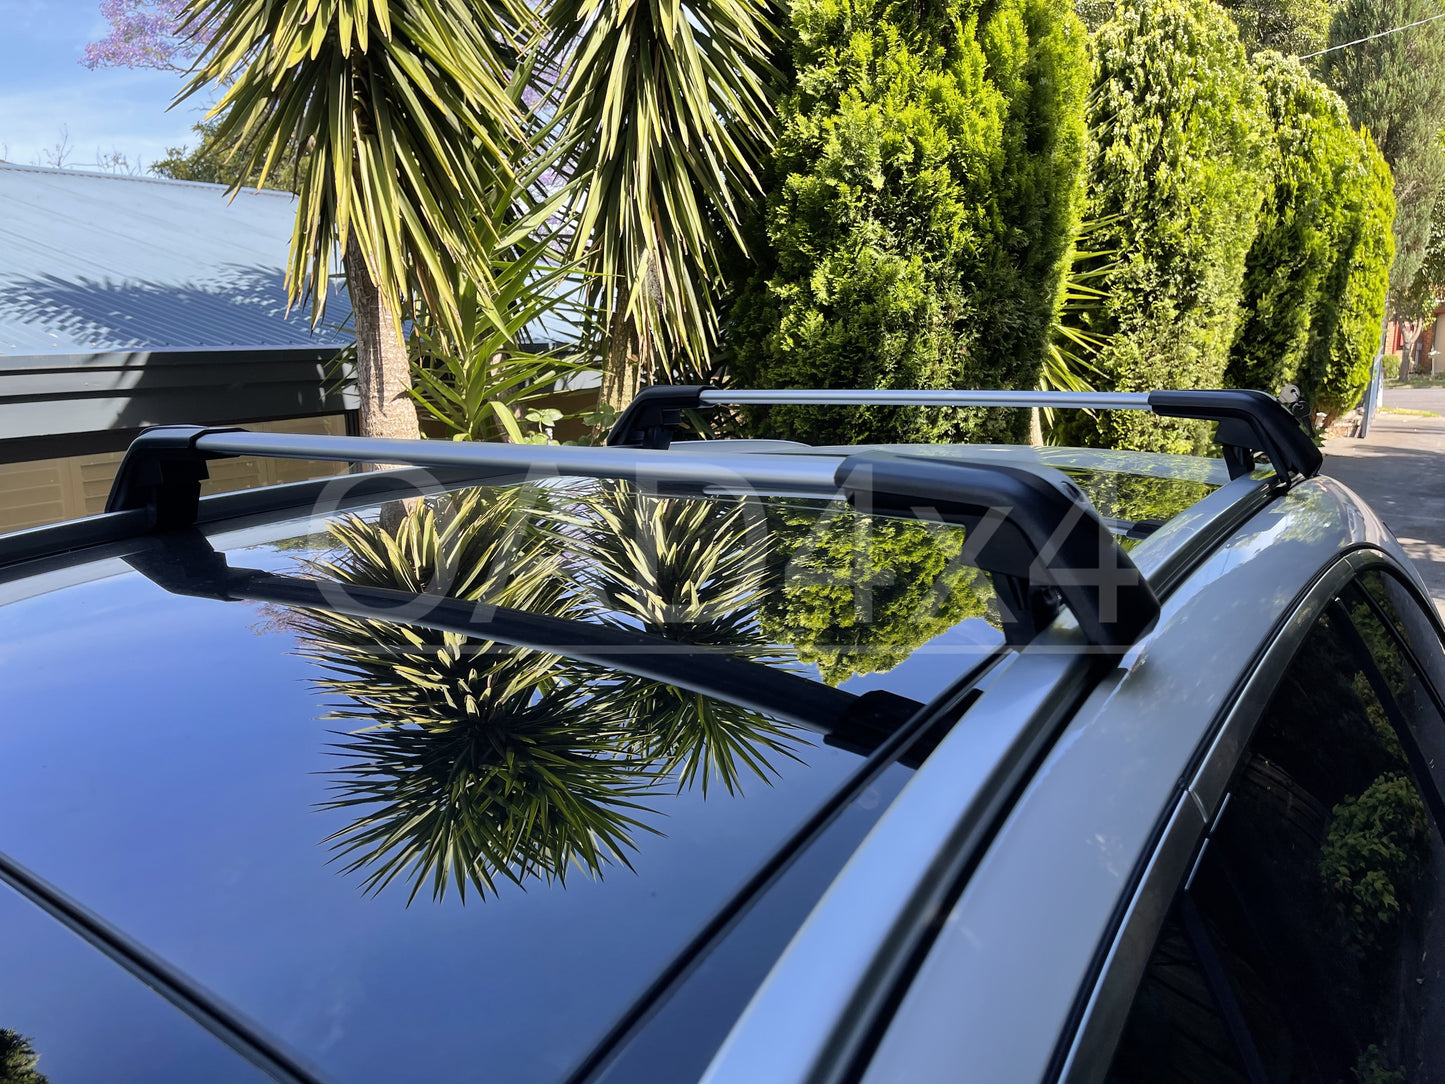 1 Pair Aluminum Silver Cross Bar Roof Racks Baggage Holder for Audi Q5 17+ Clamp in Flush Rail